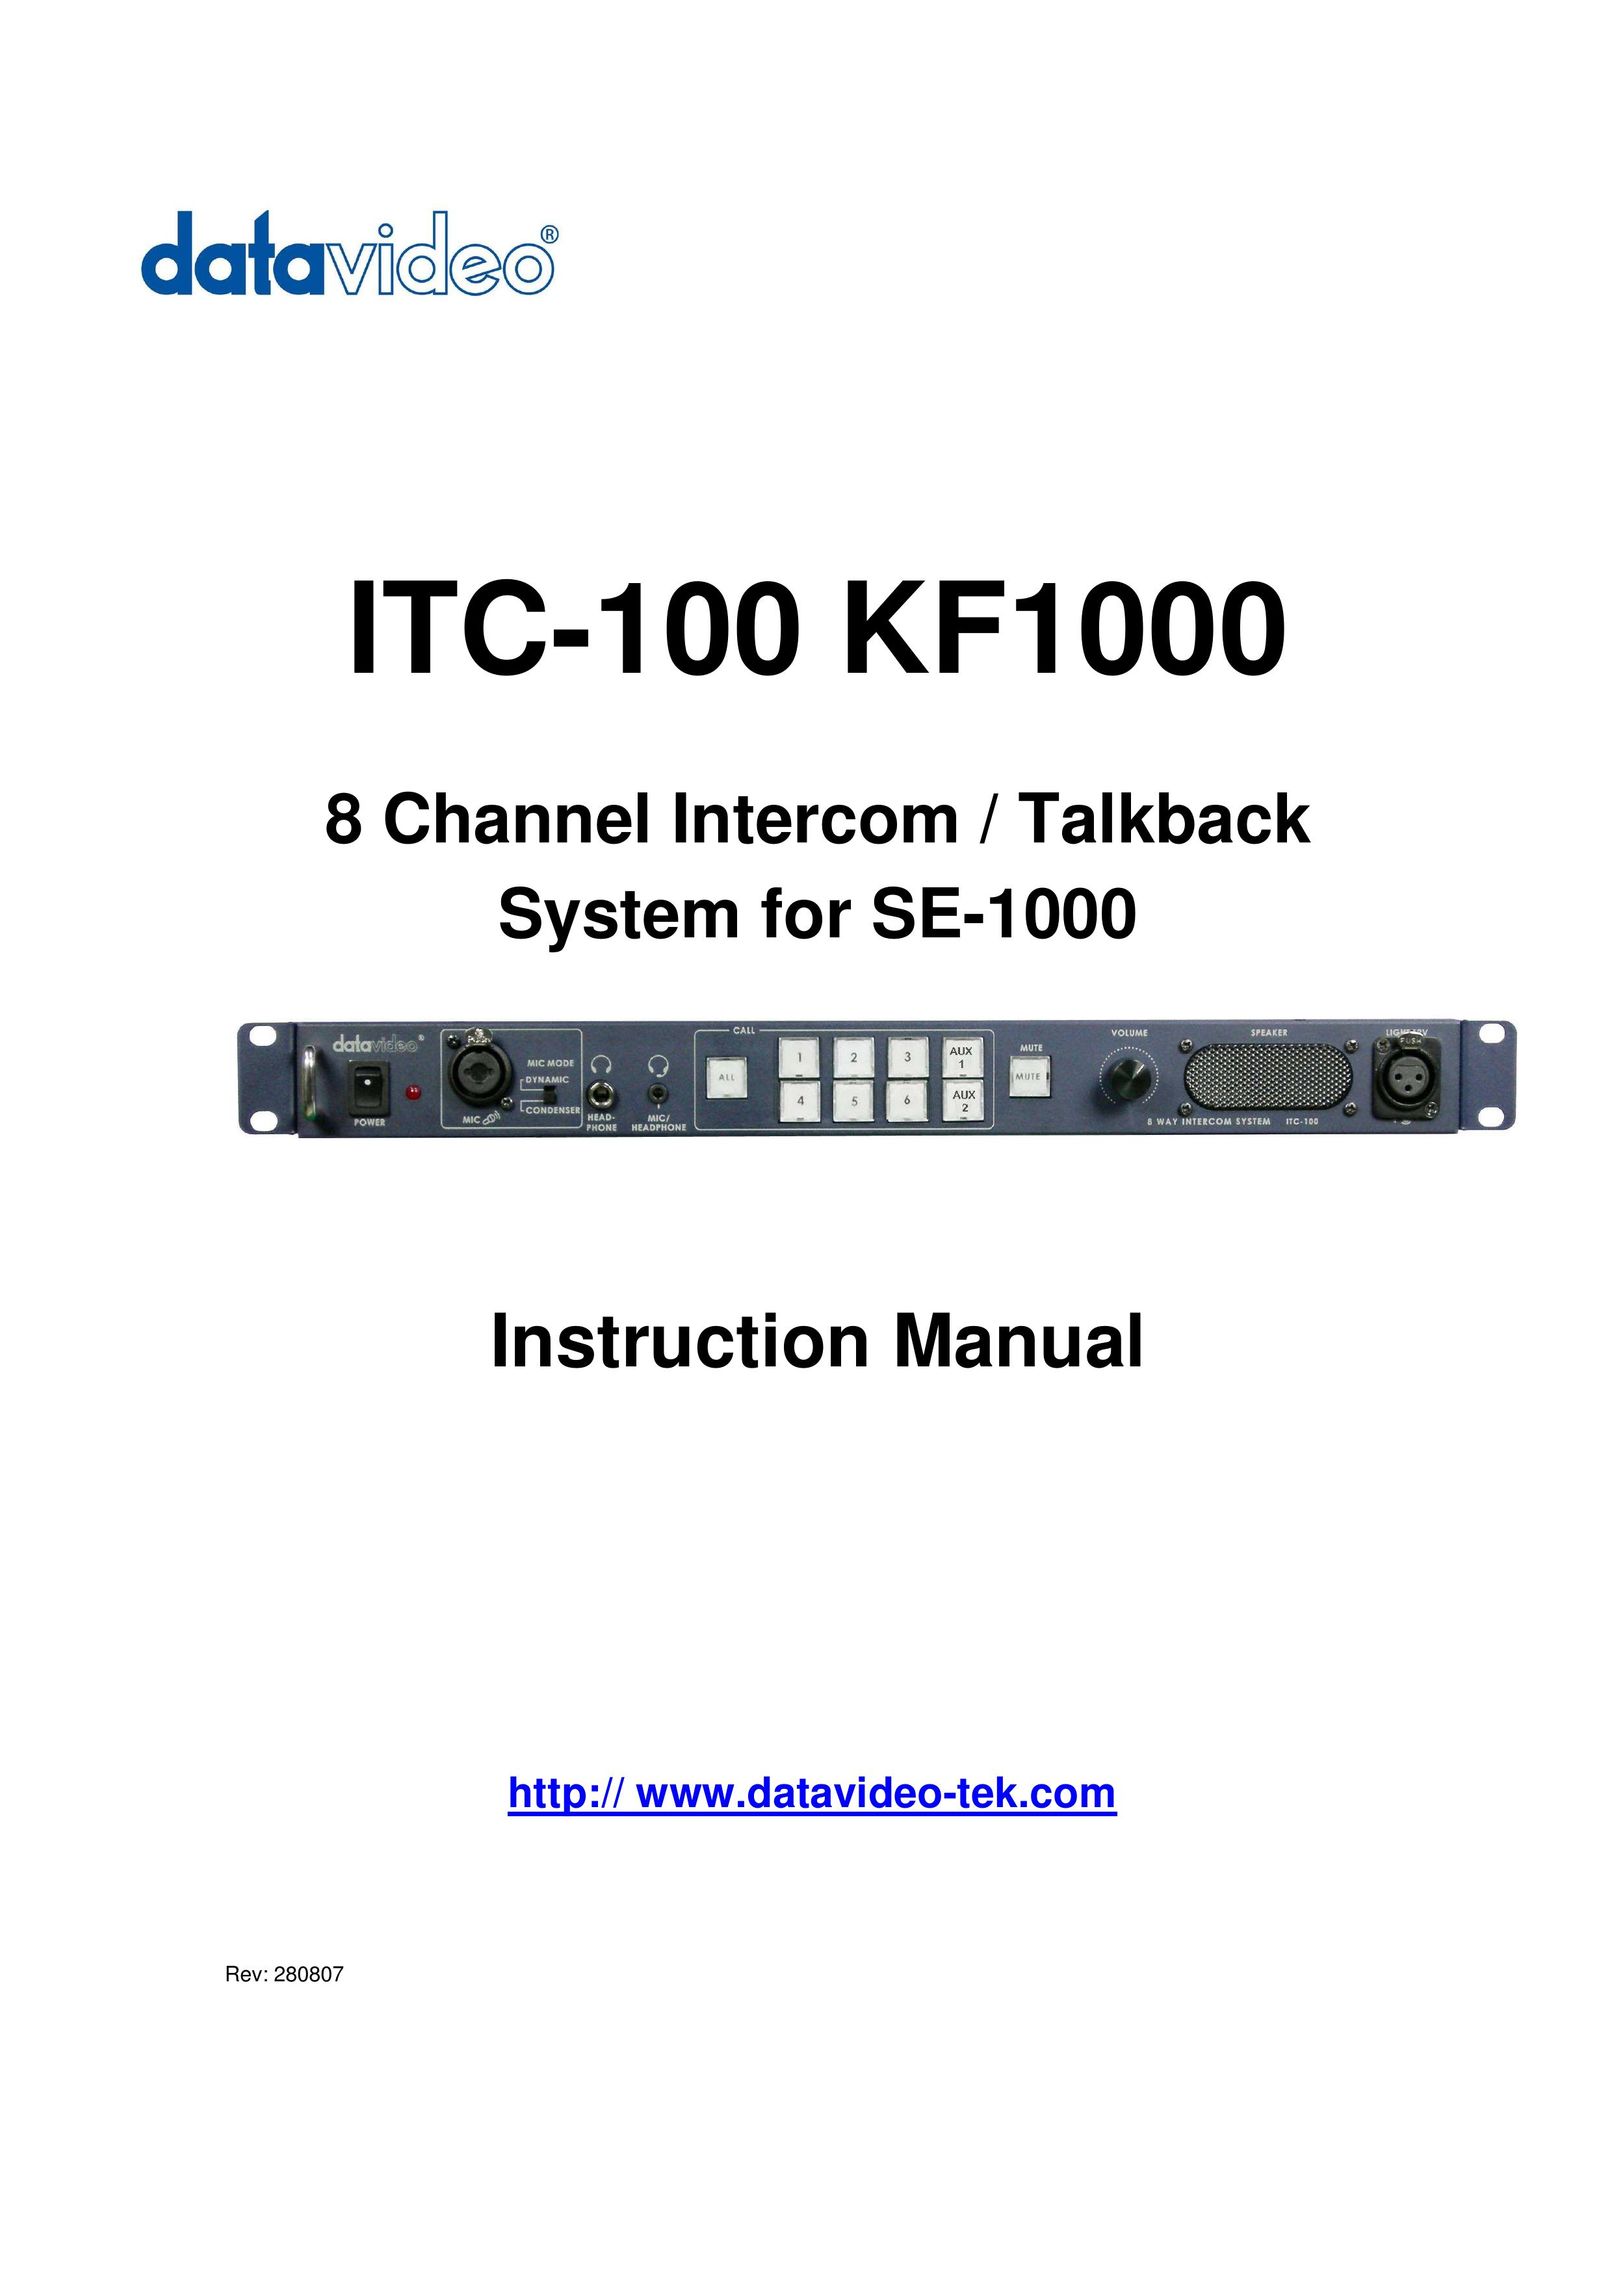 Datavideo ITC-100 KF1000 Network Card User Manual